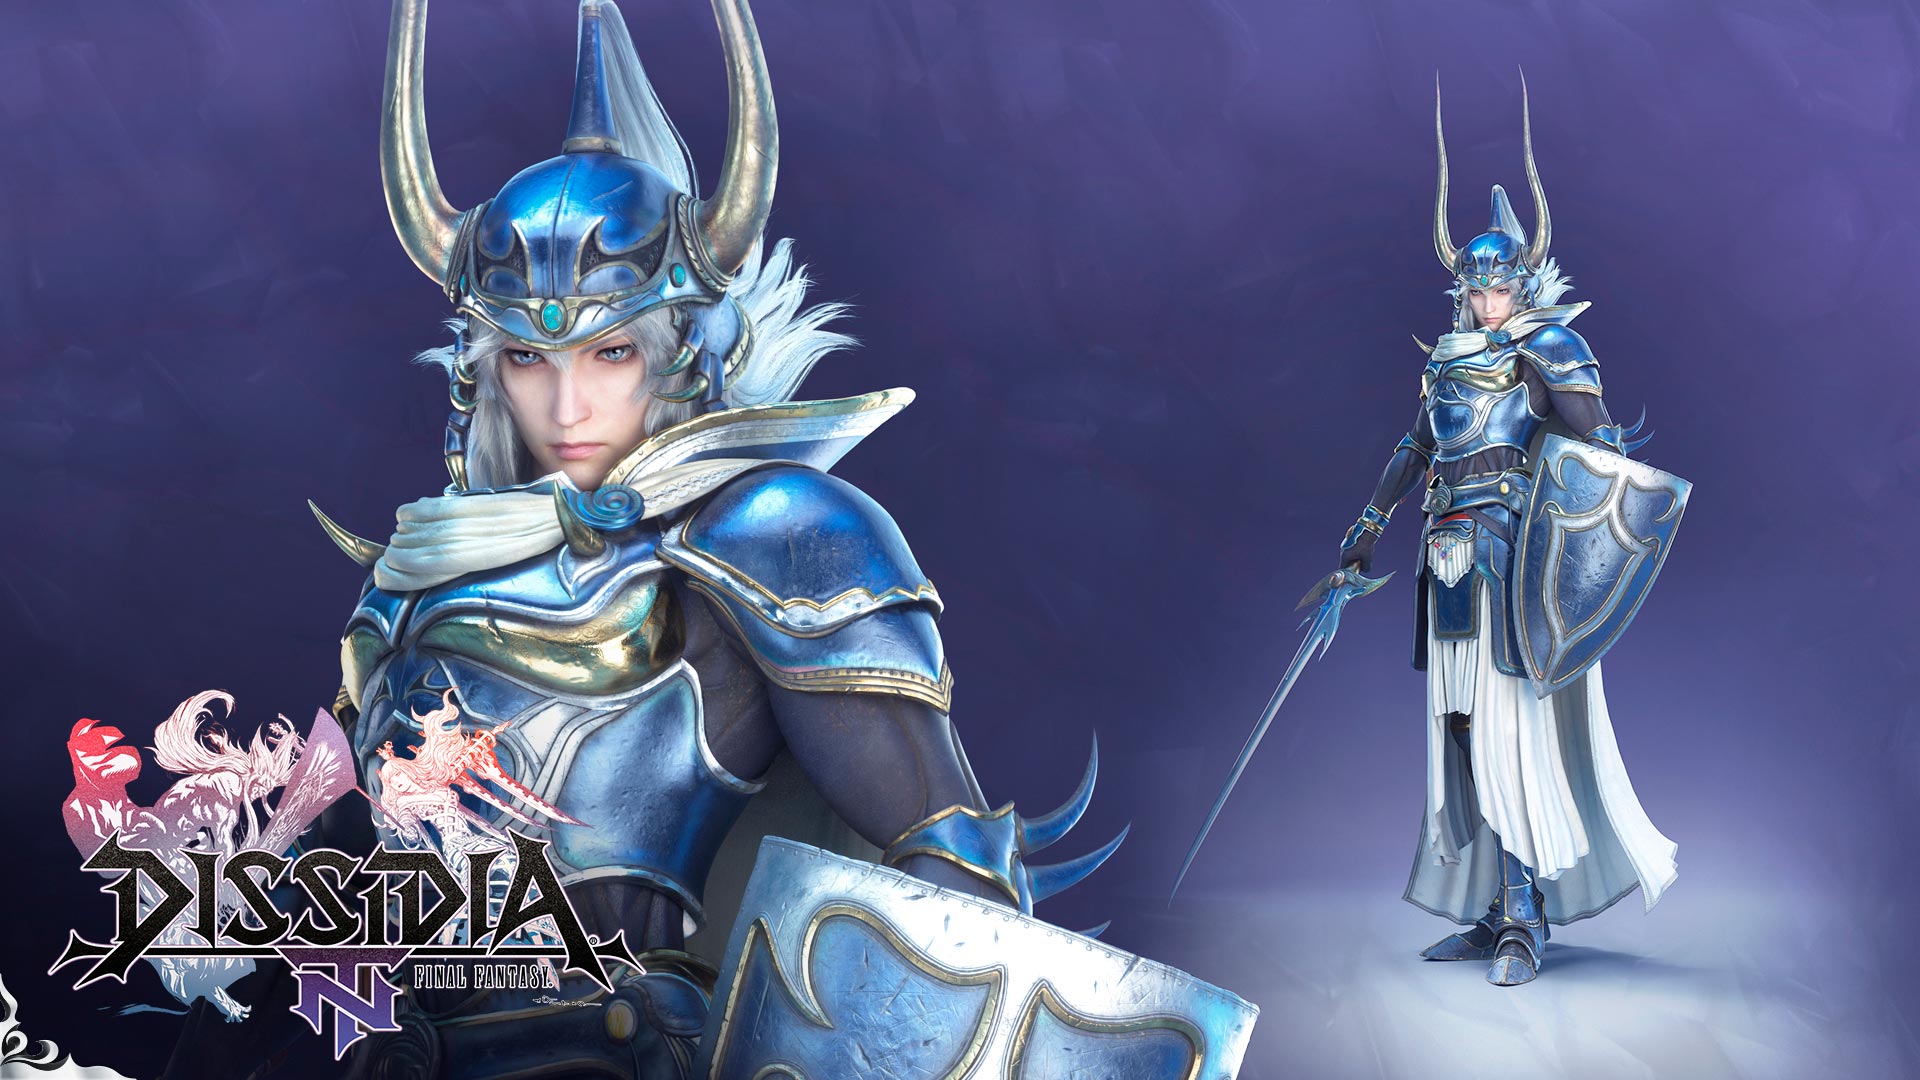 DiSSiDiA FiNAL FANTASY NT Warrior Of Light Final Fantasy Anime Boys Armor Shield Sword Looking At Vi 1920x1080